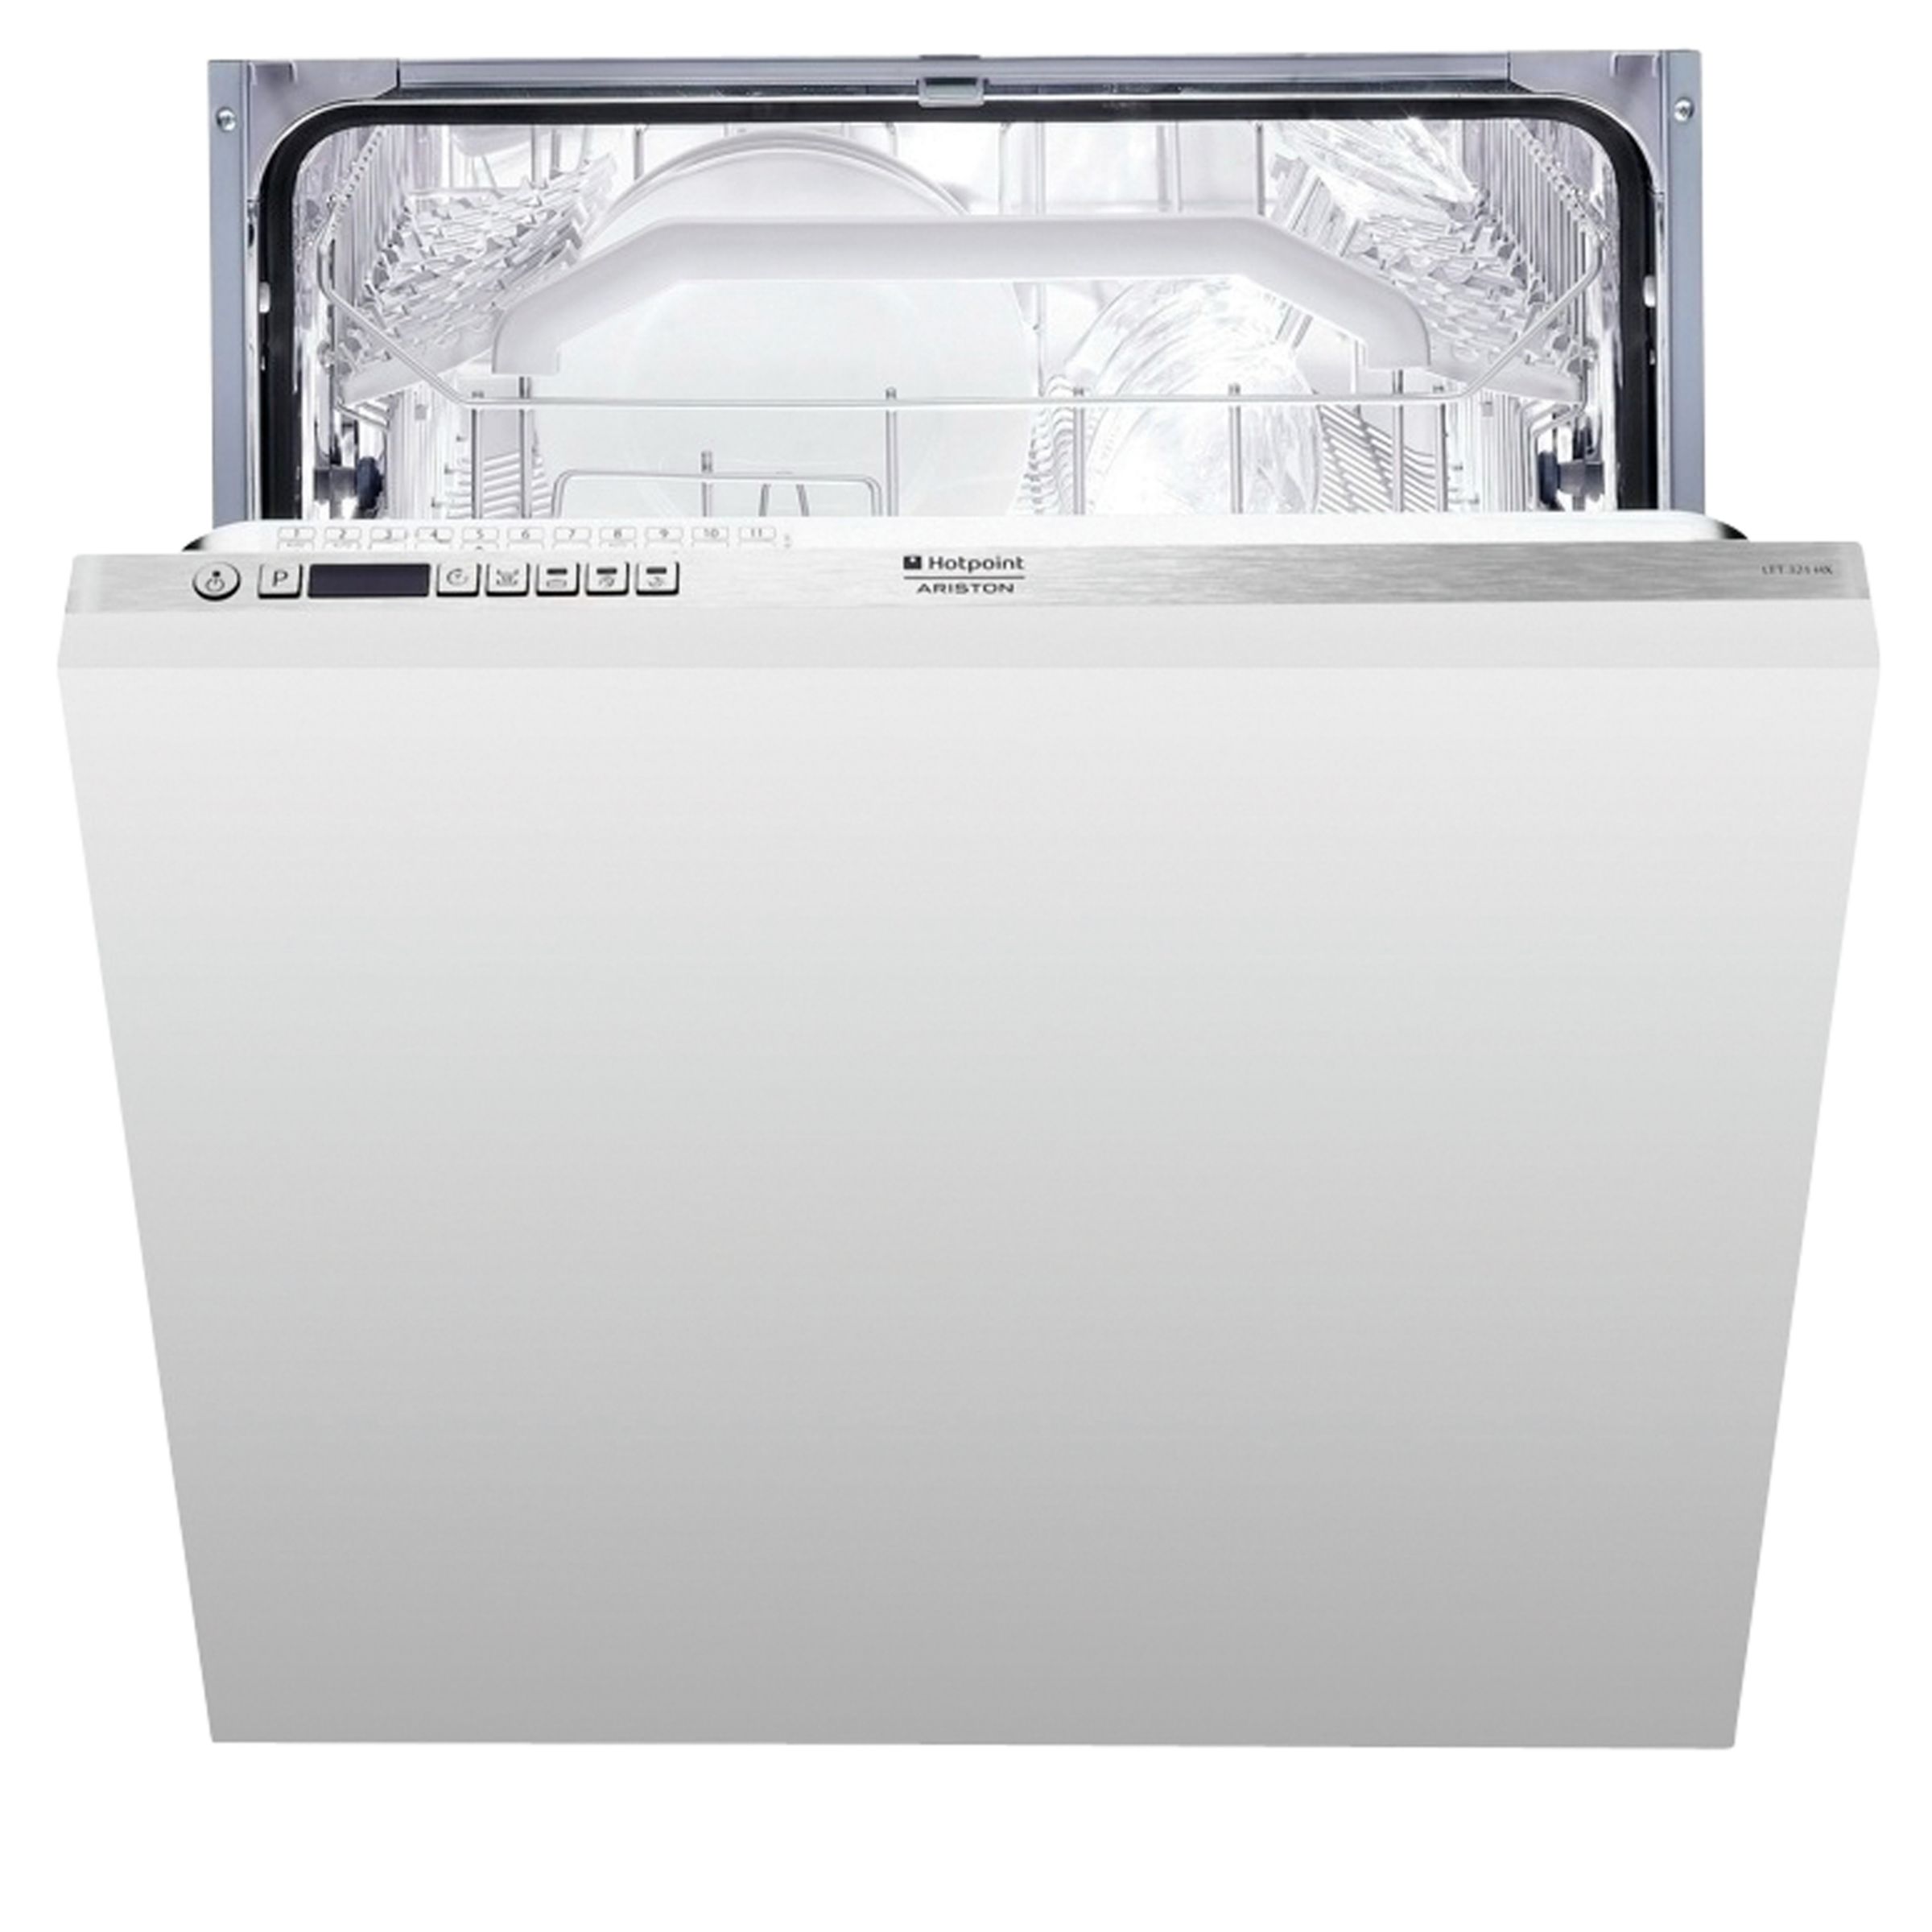 Hotpoint LFT321HX Integrated Dishwasher, White at John Lewis